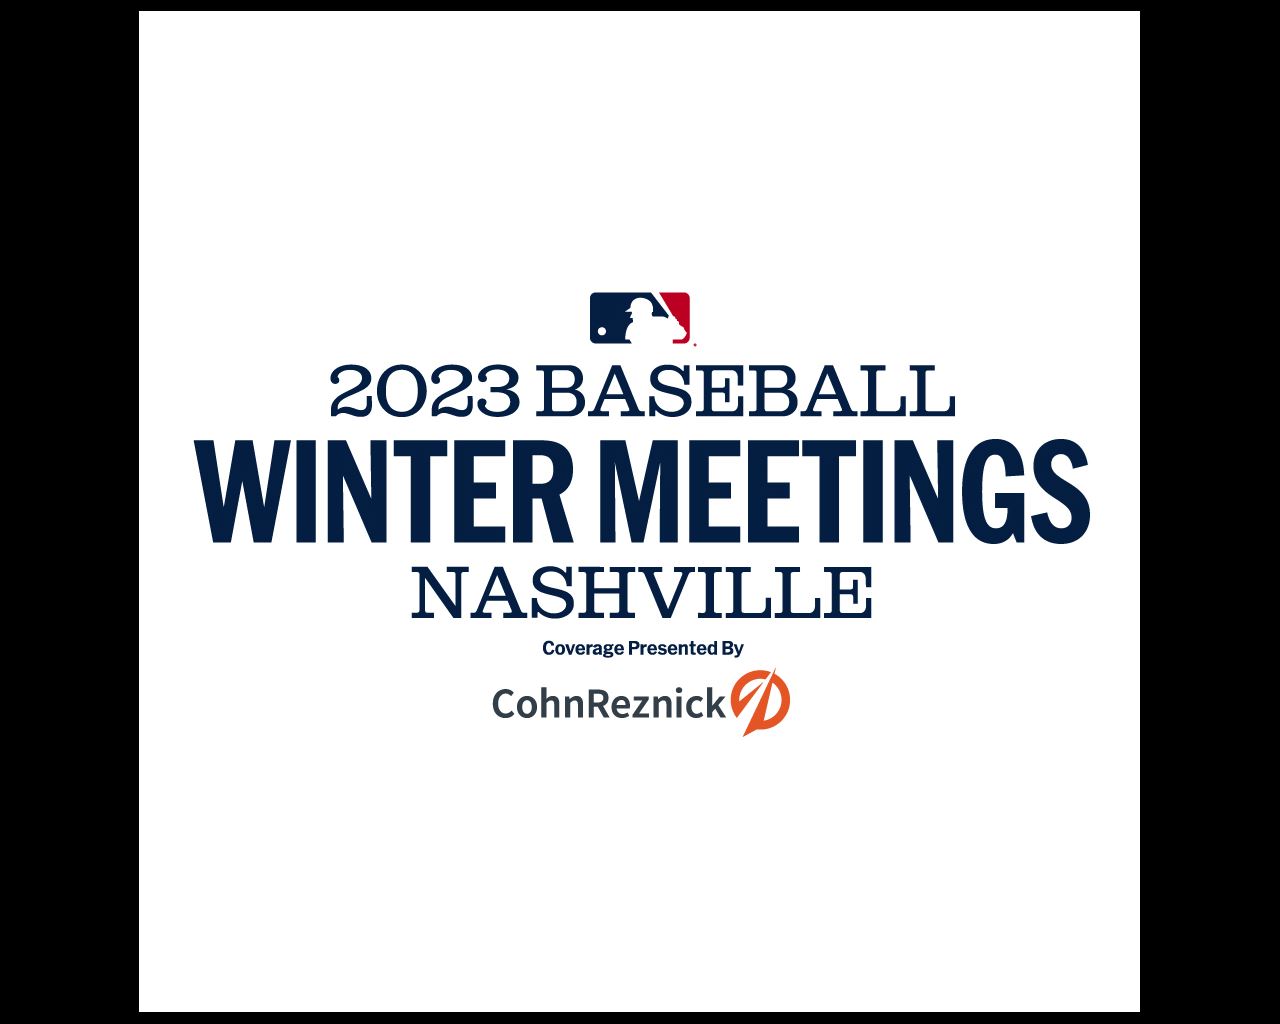 MLB Winter meetings logo